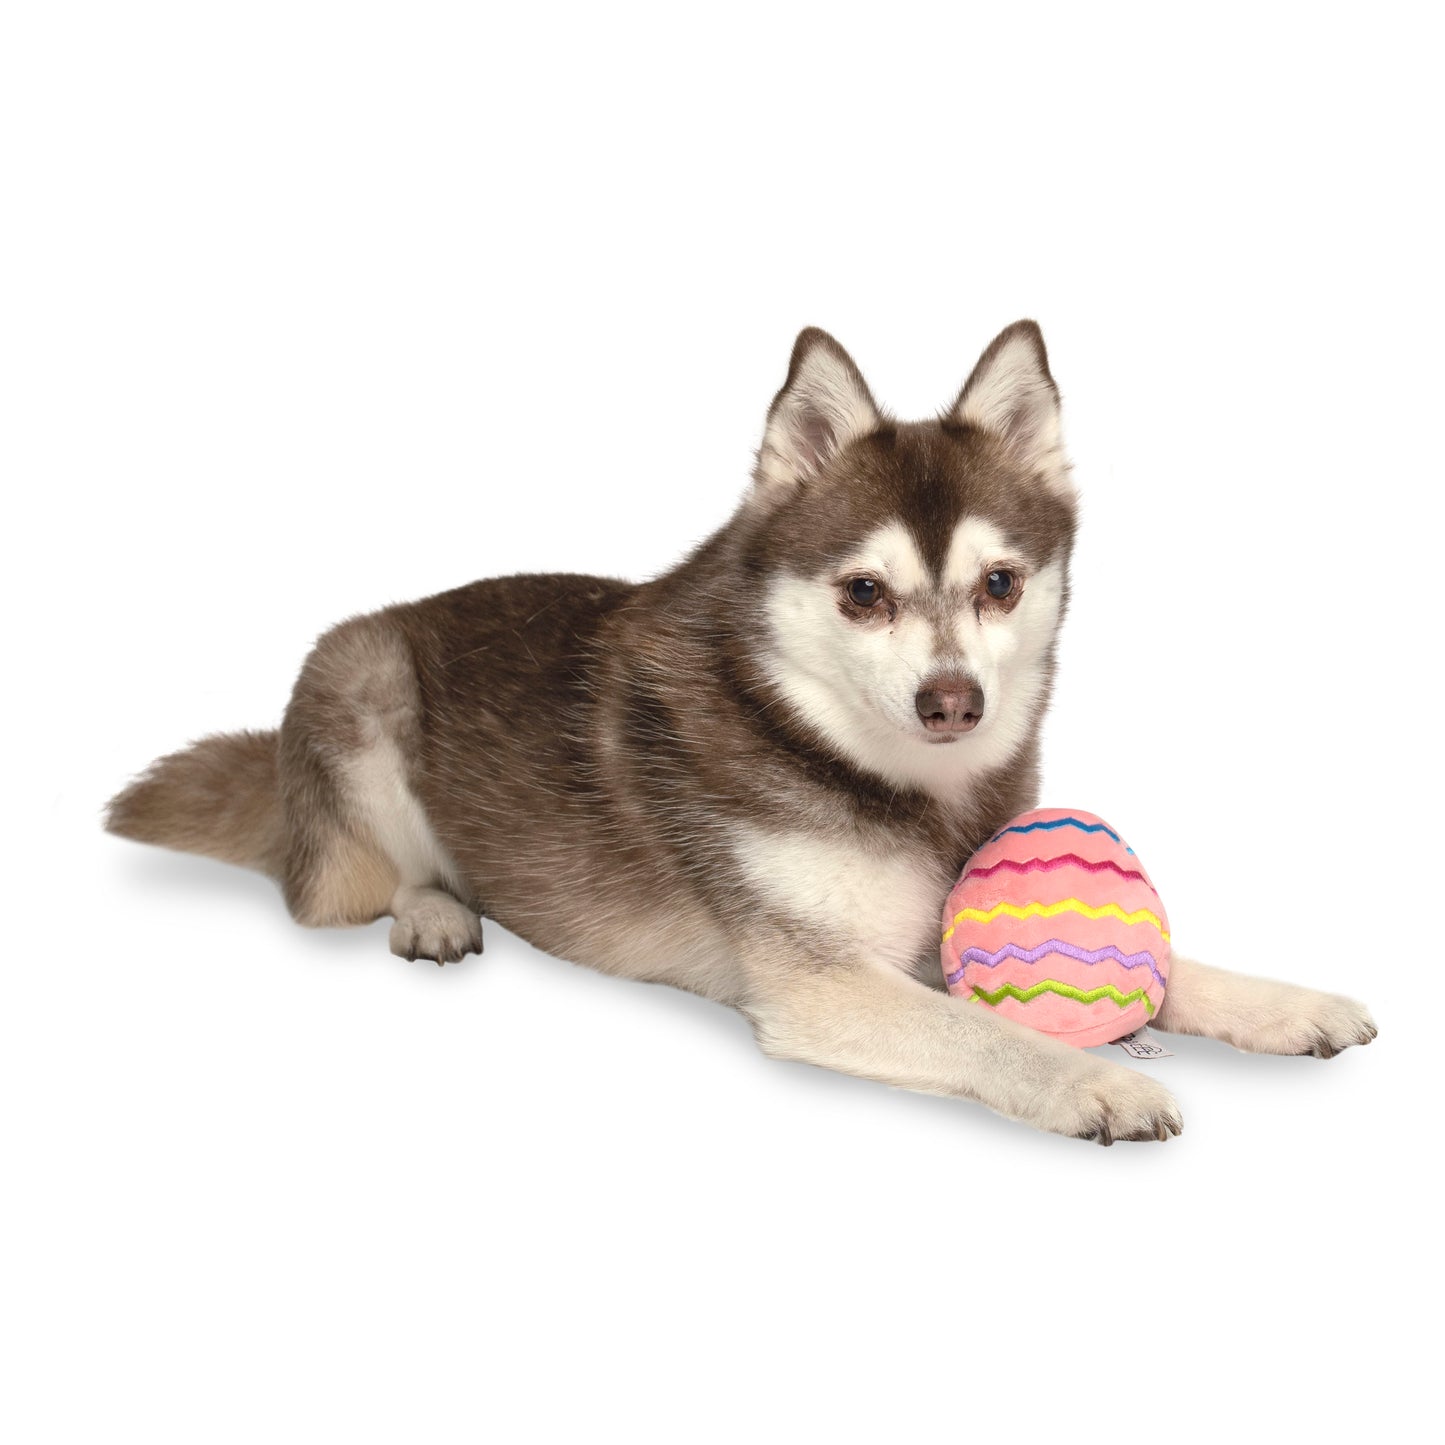 Midlee Easter Egg Plush Dog Toy - Pink